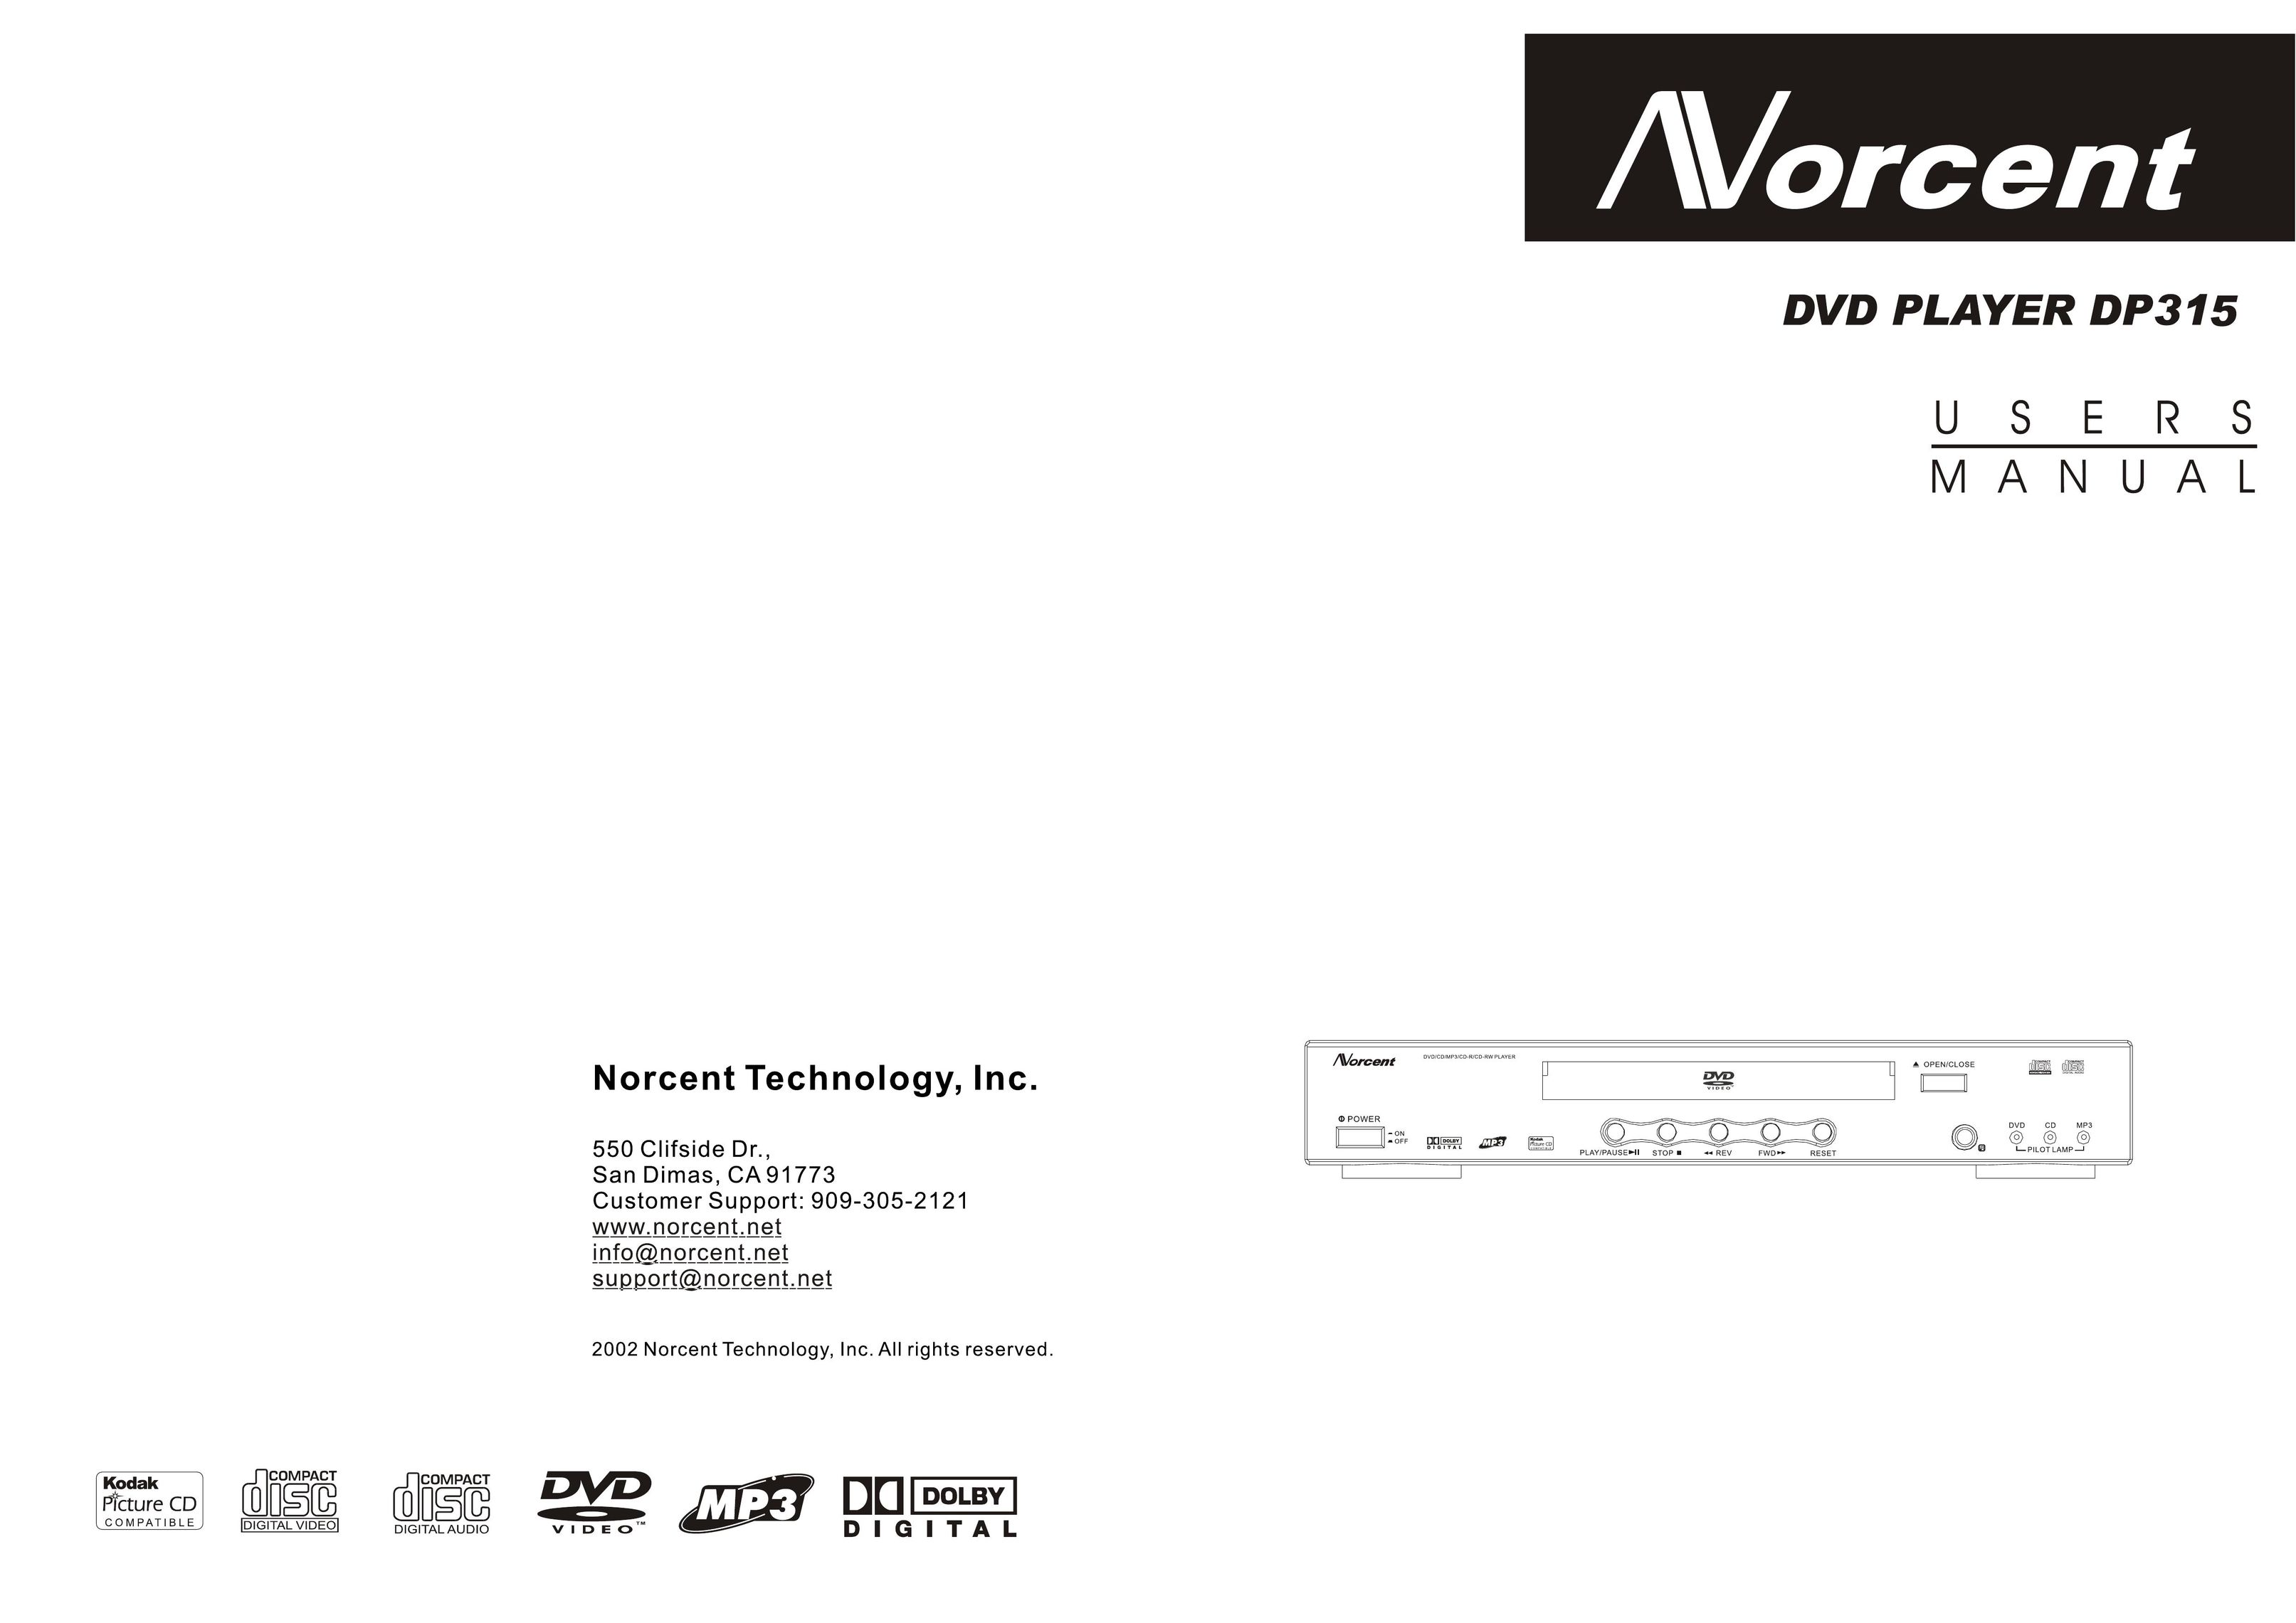 Norcent Technologies DP315 DVD Player User Manual